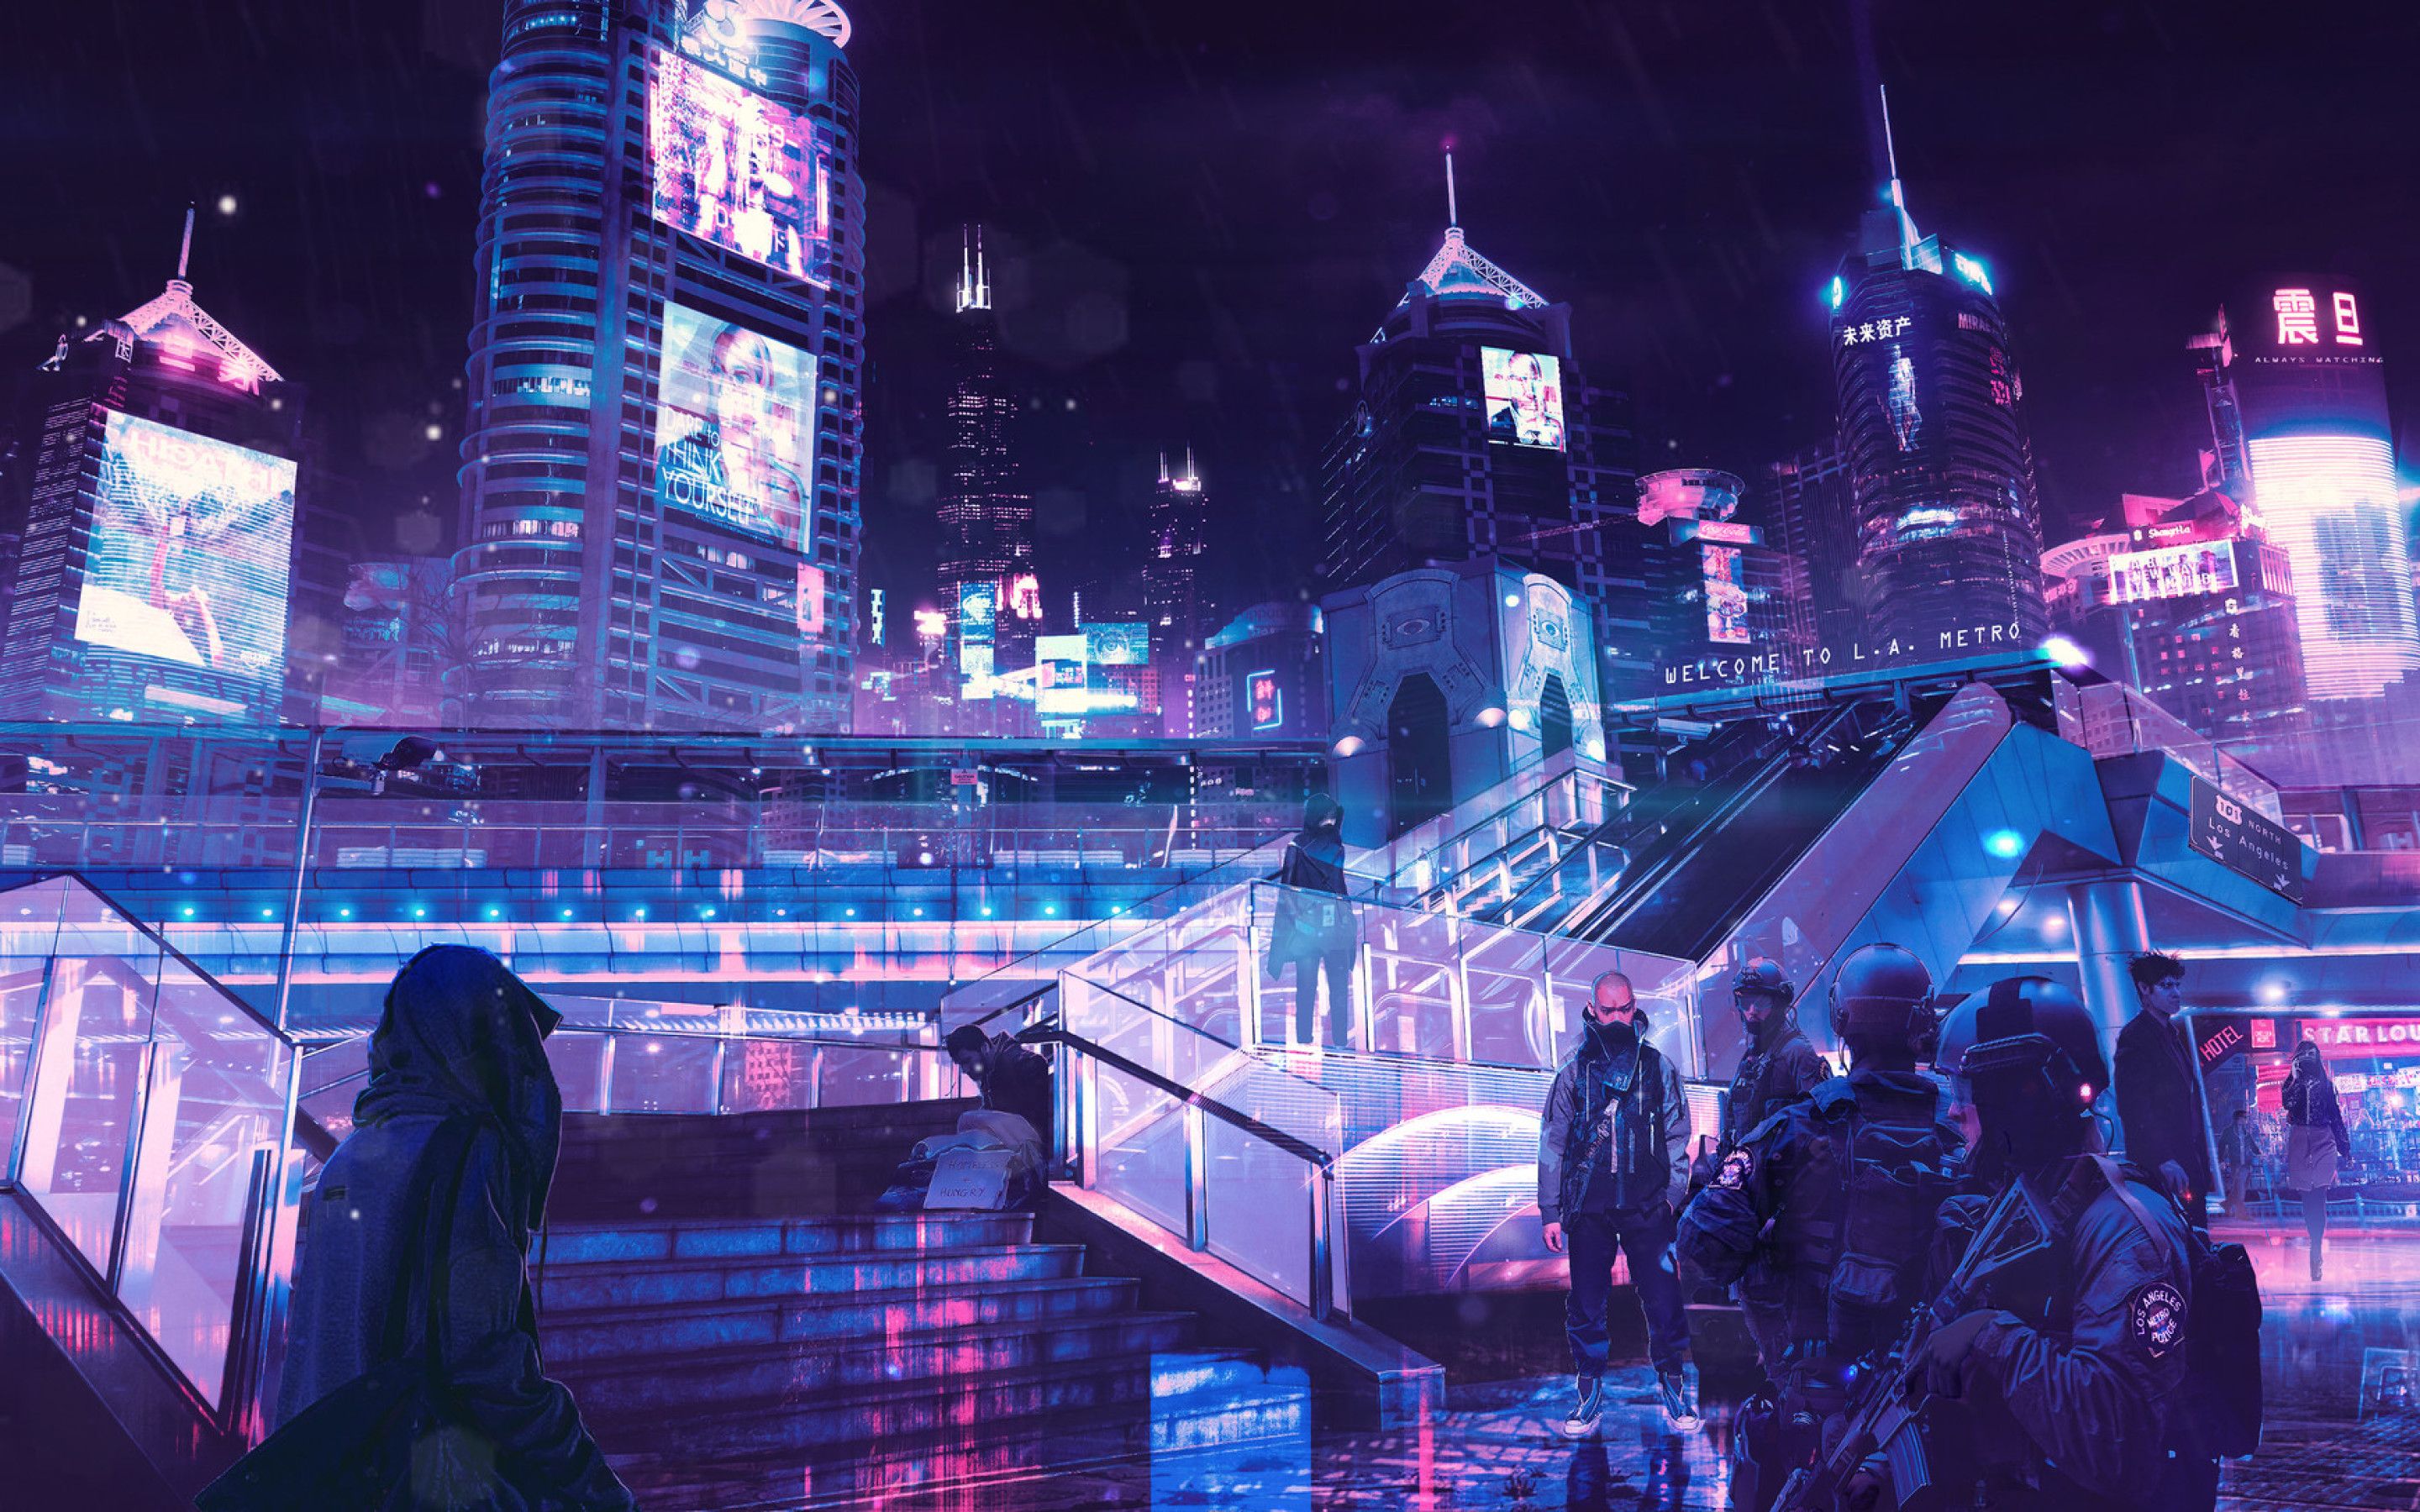 Cyberpunk Neon City Macbook Pro Retina HD 4k Wallpaper, Image, Background, Photo and Picture